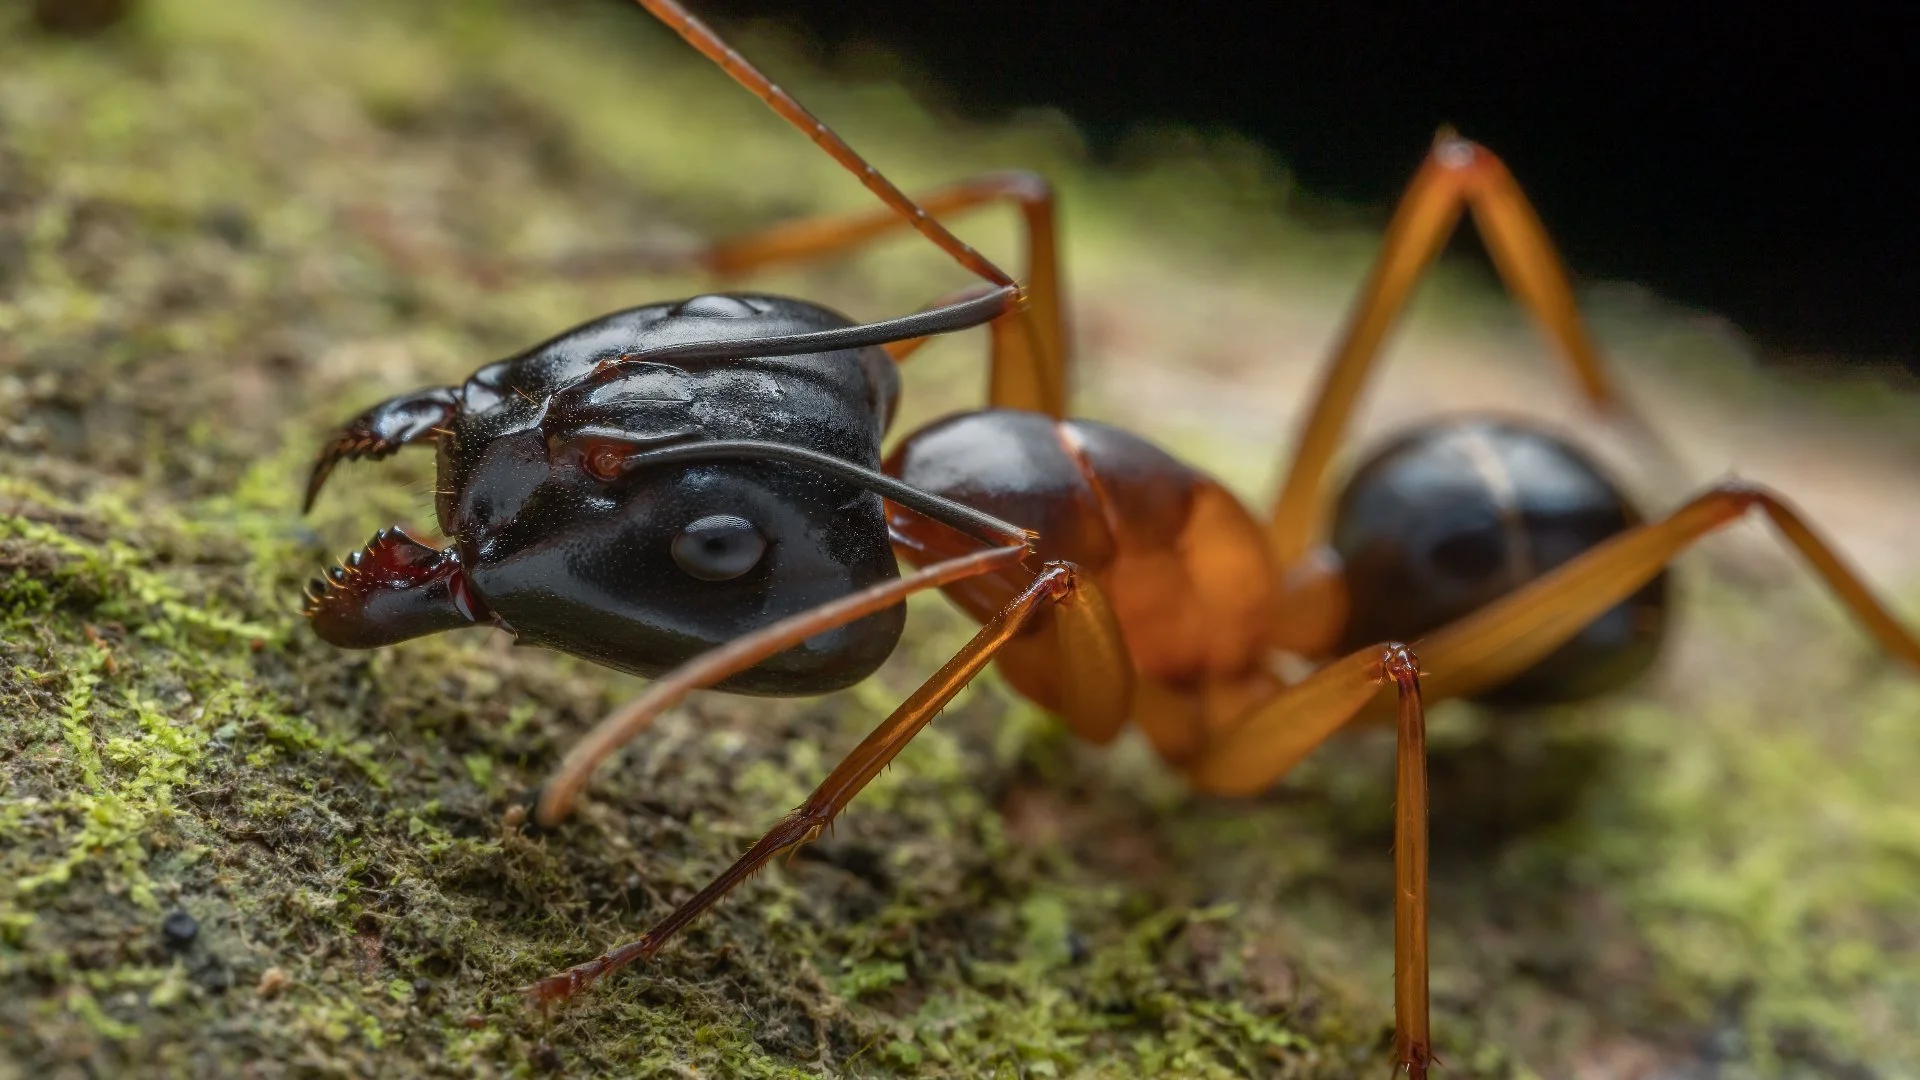 Big-Headed Ants